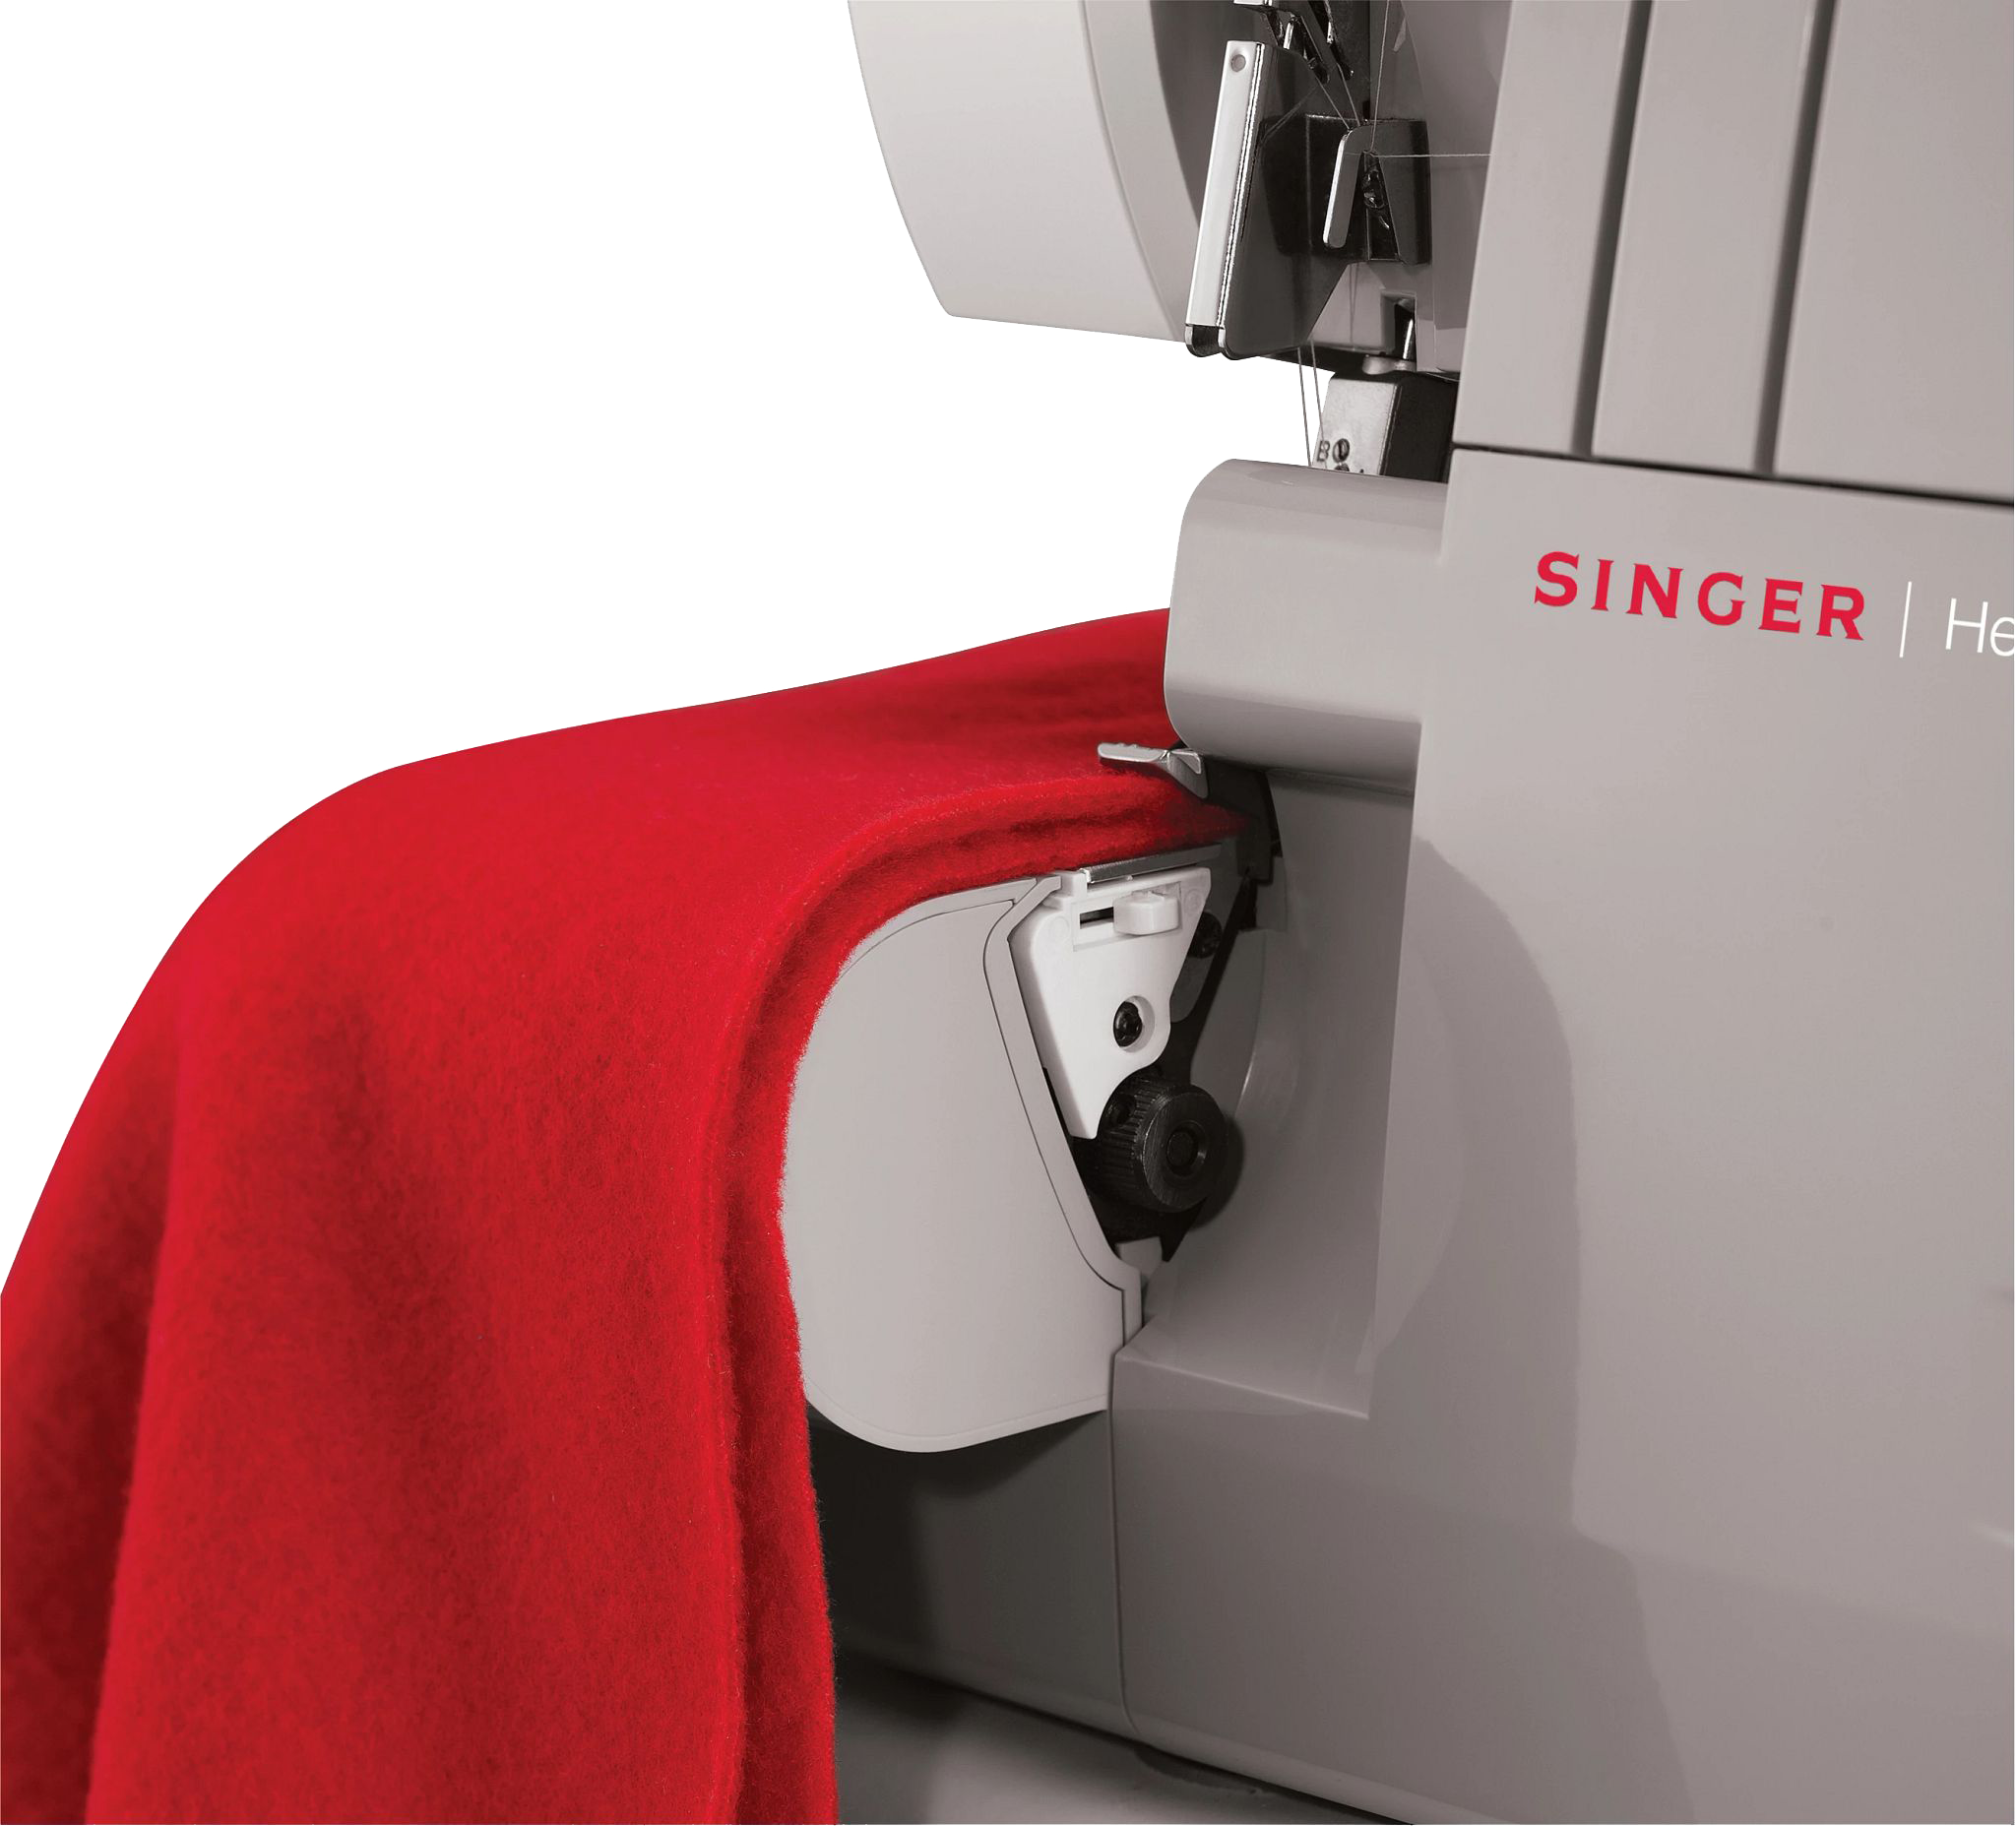 Singer 14HD854 Heavy Duty Sewing Machine